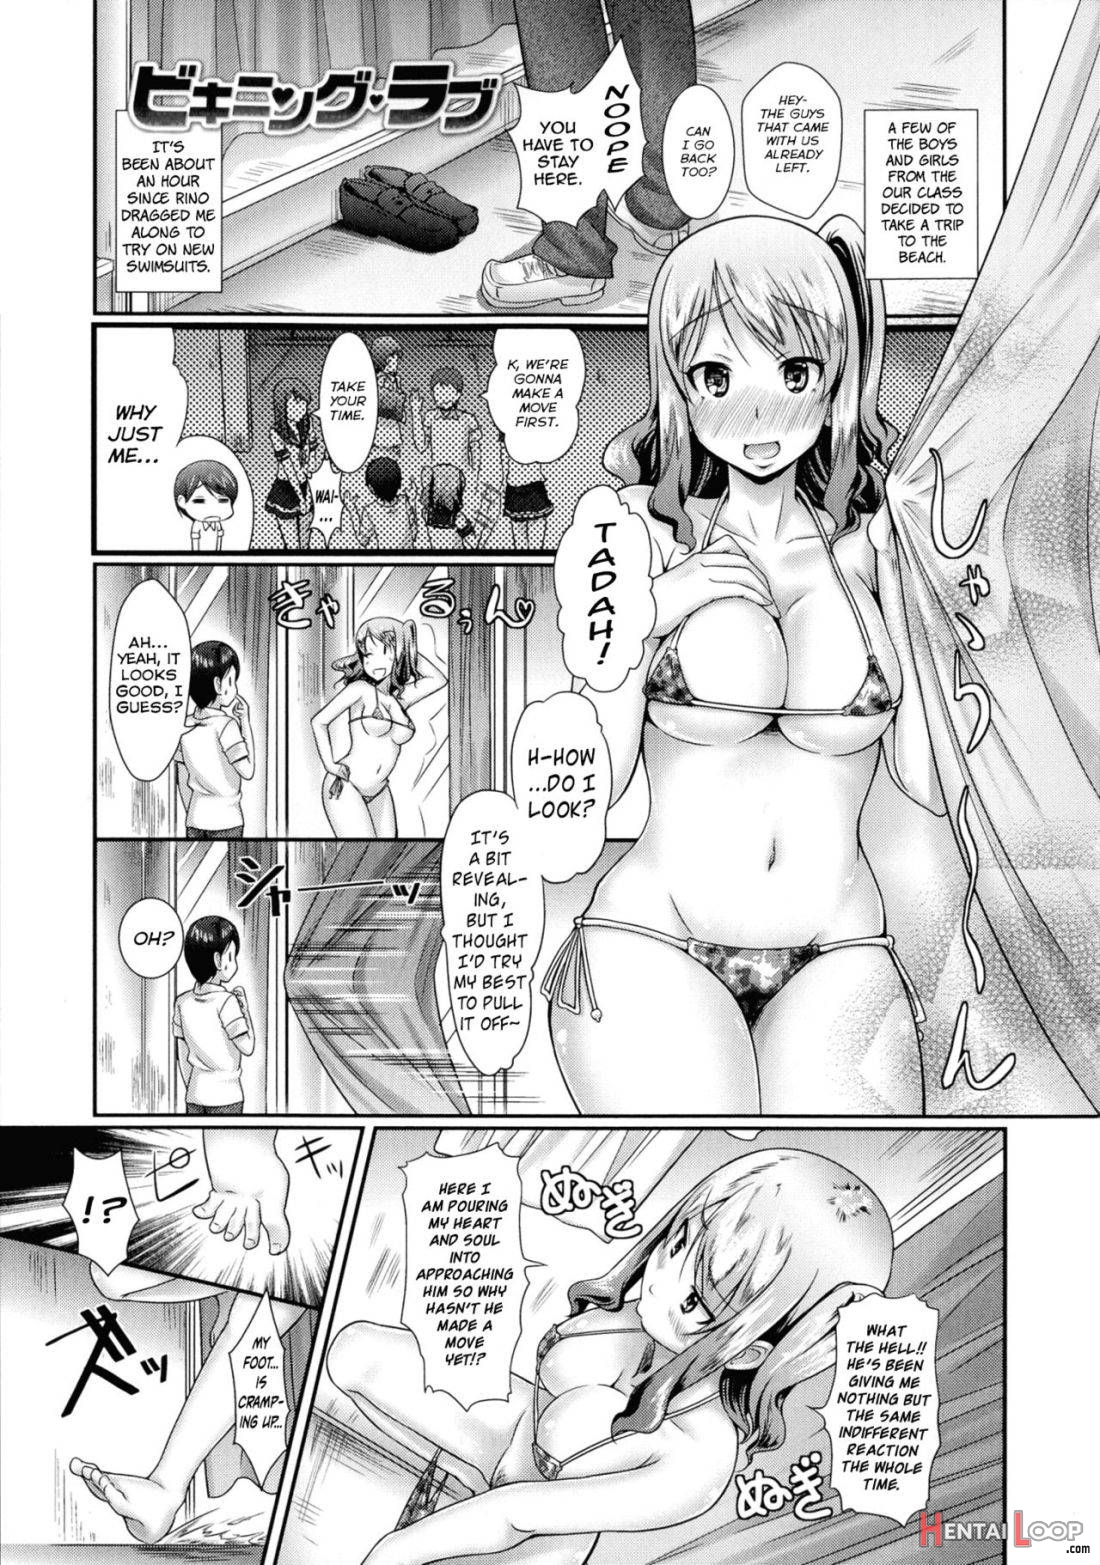 Bikining Love page 1